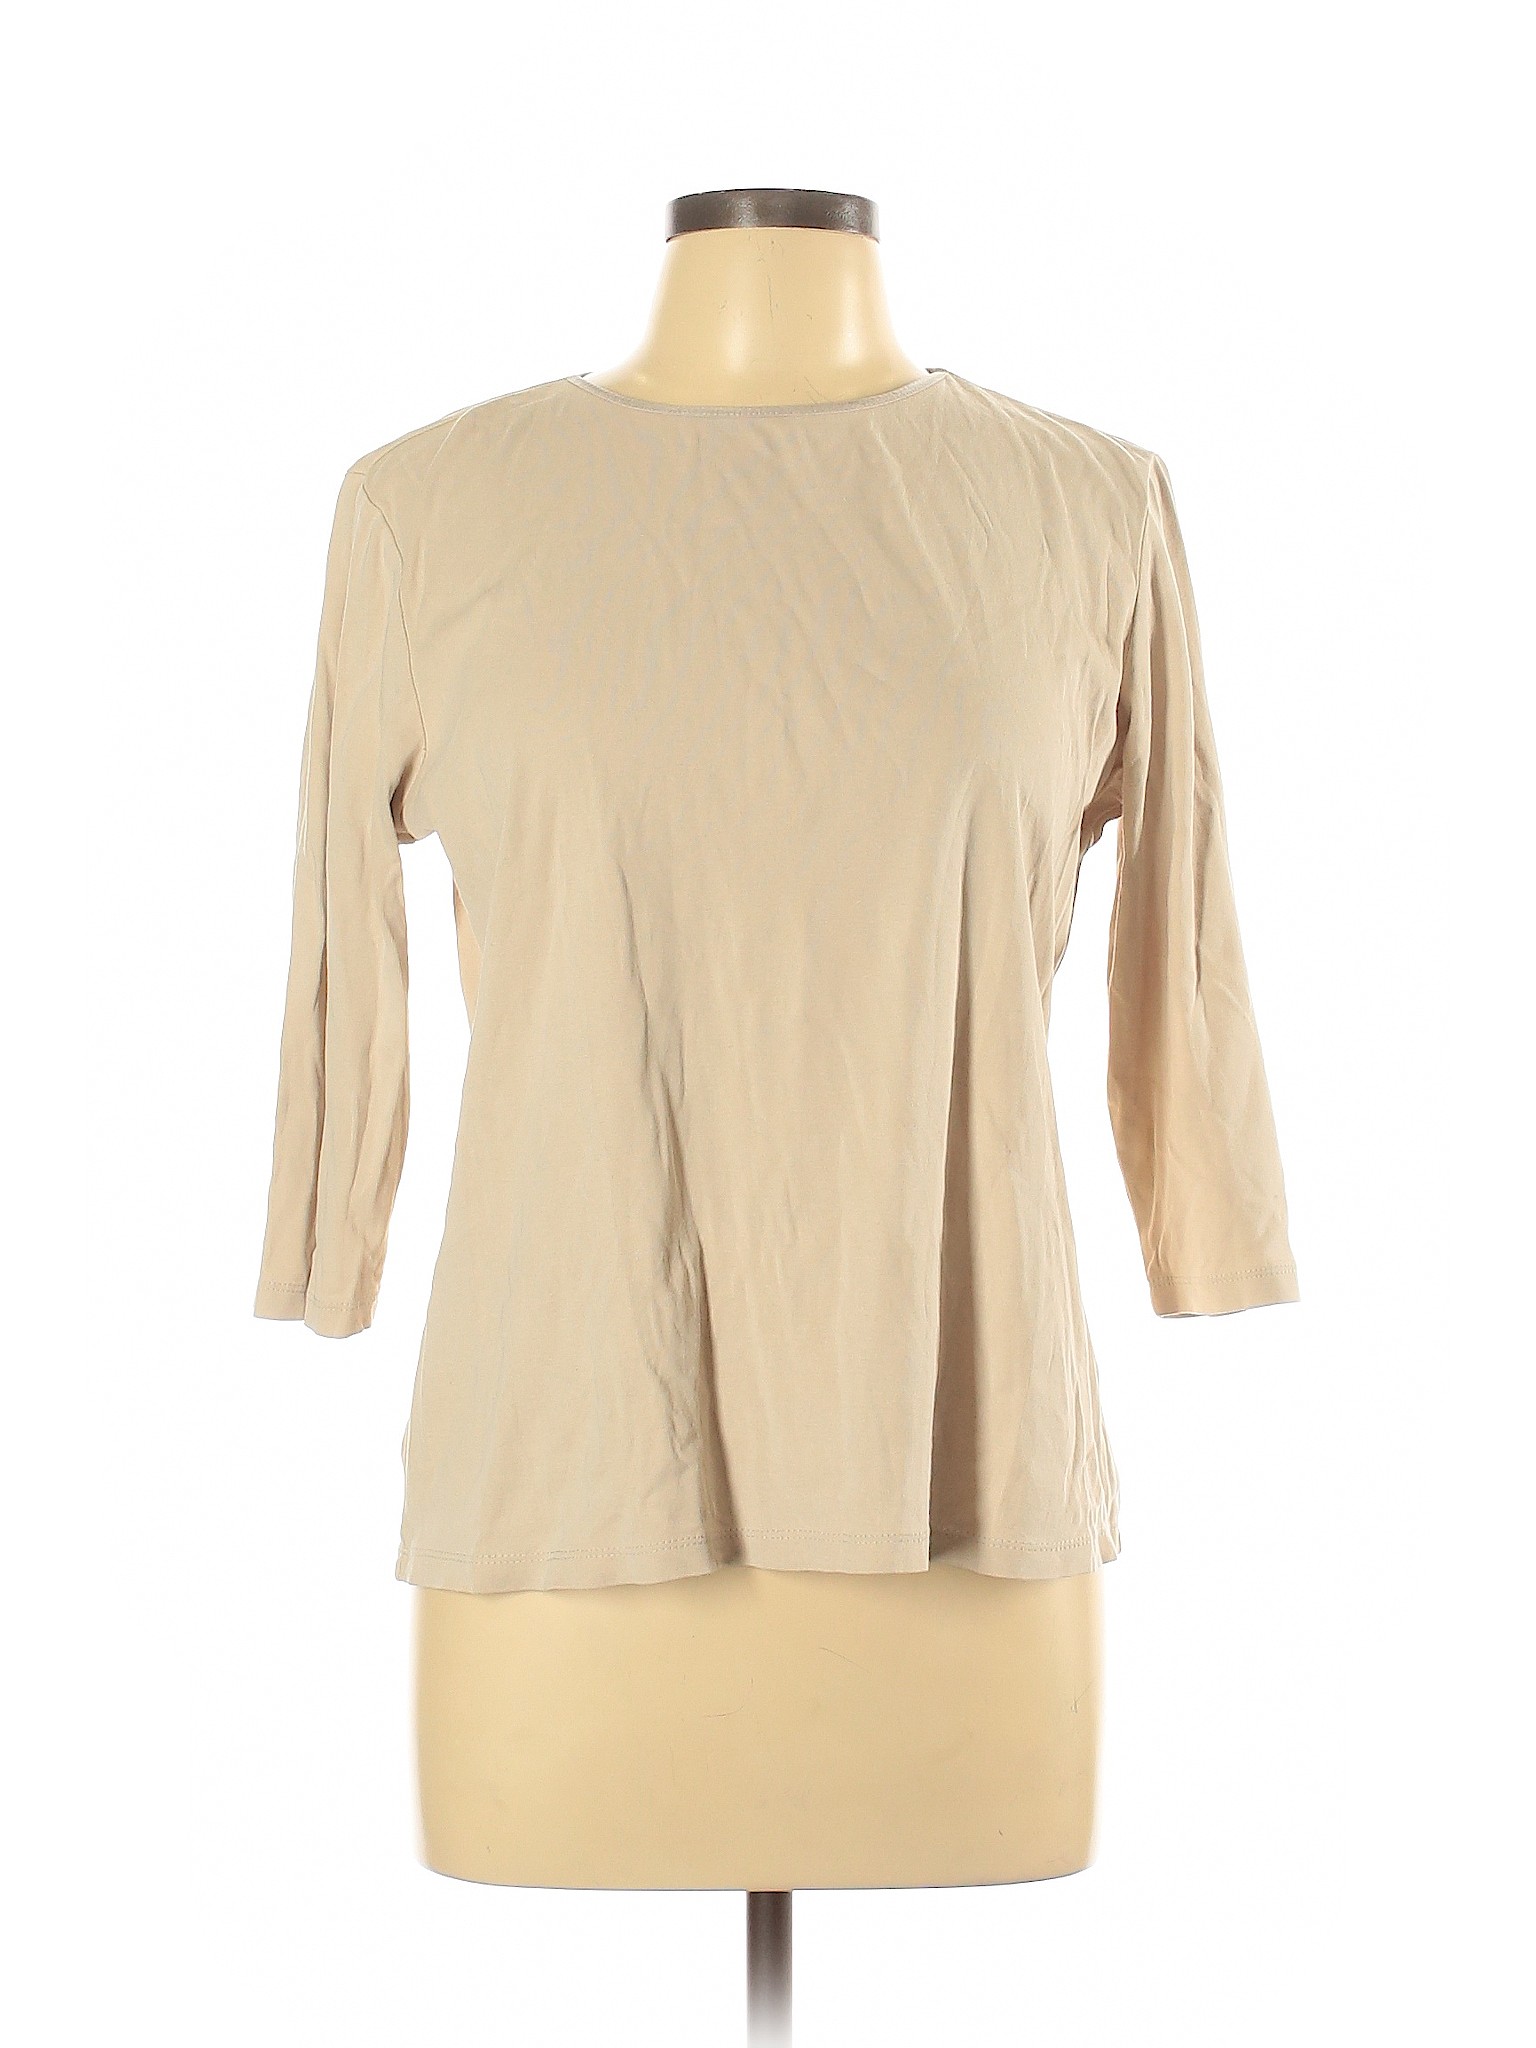 Christopher & Banks Women Brown 3/4 Sleeve T-Shirt L | eBay